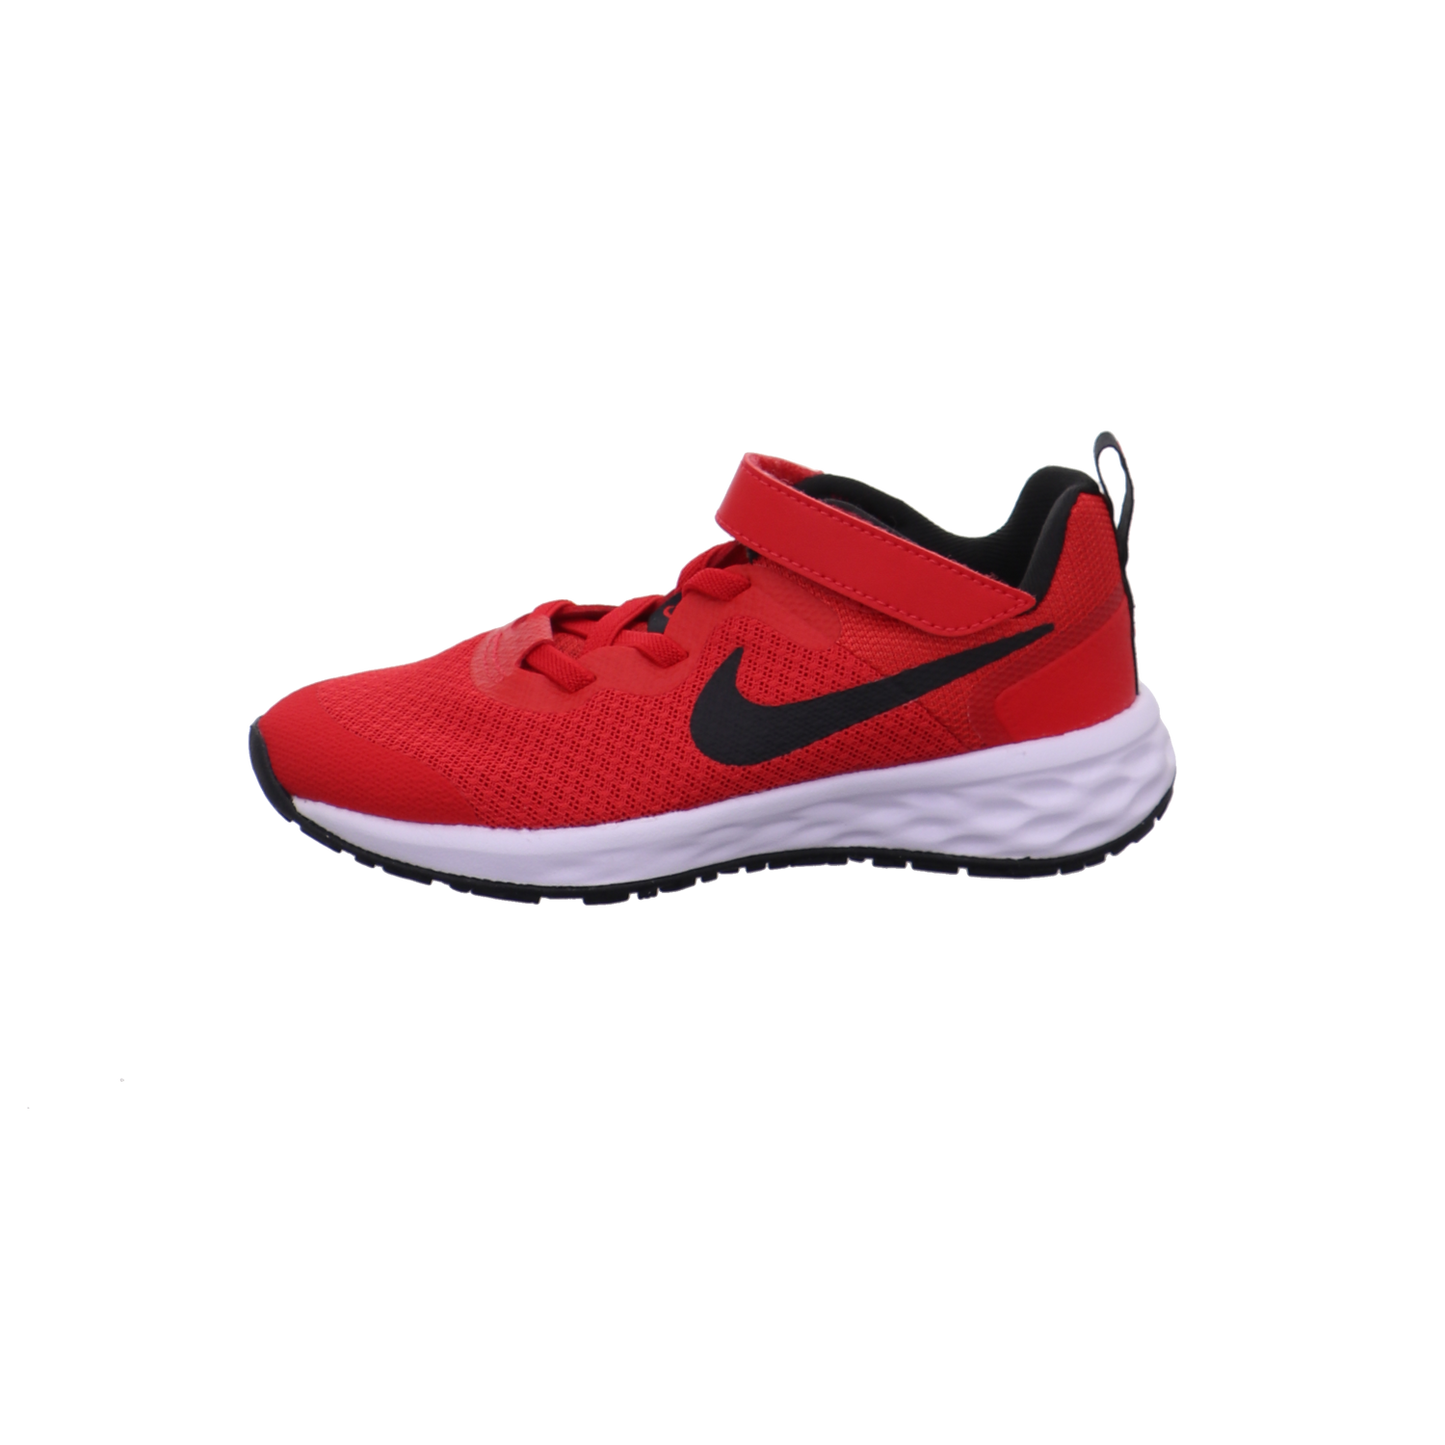 Nike Sneaker rot kombi Bild1